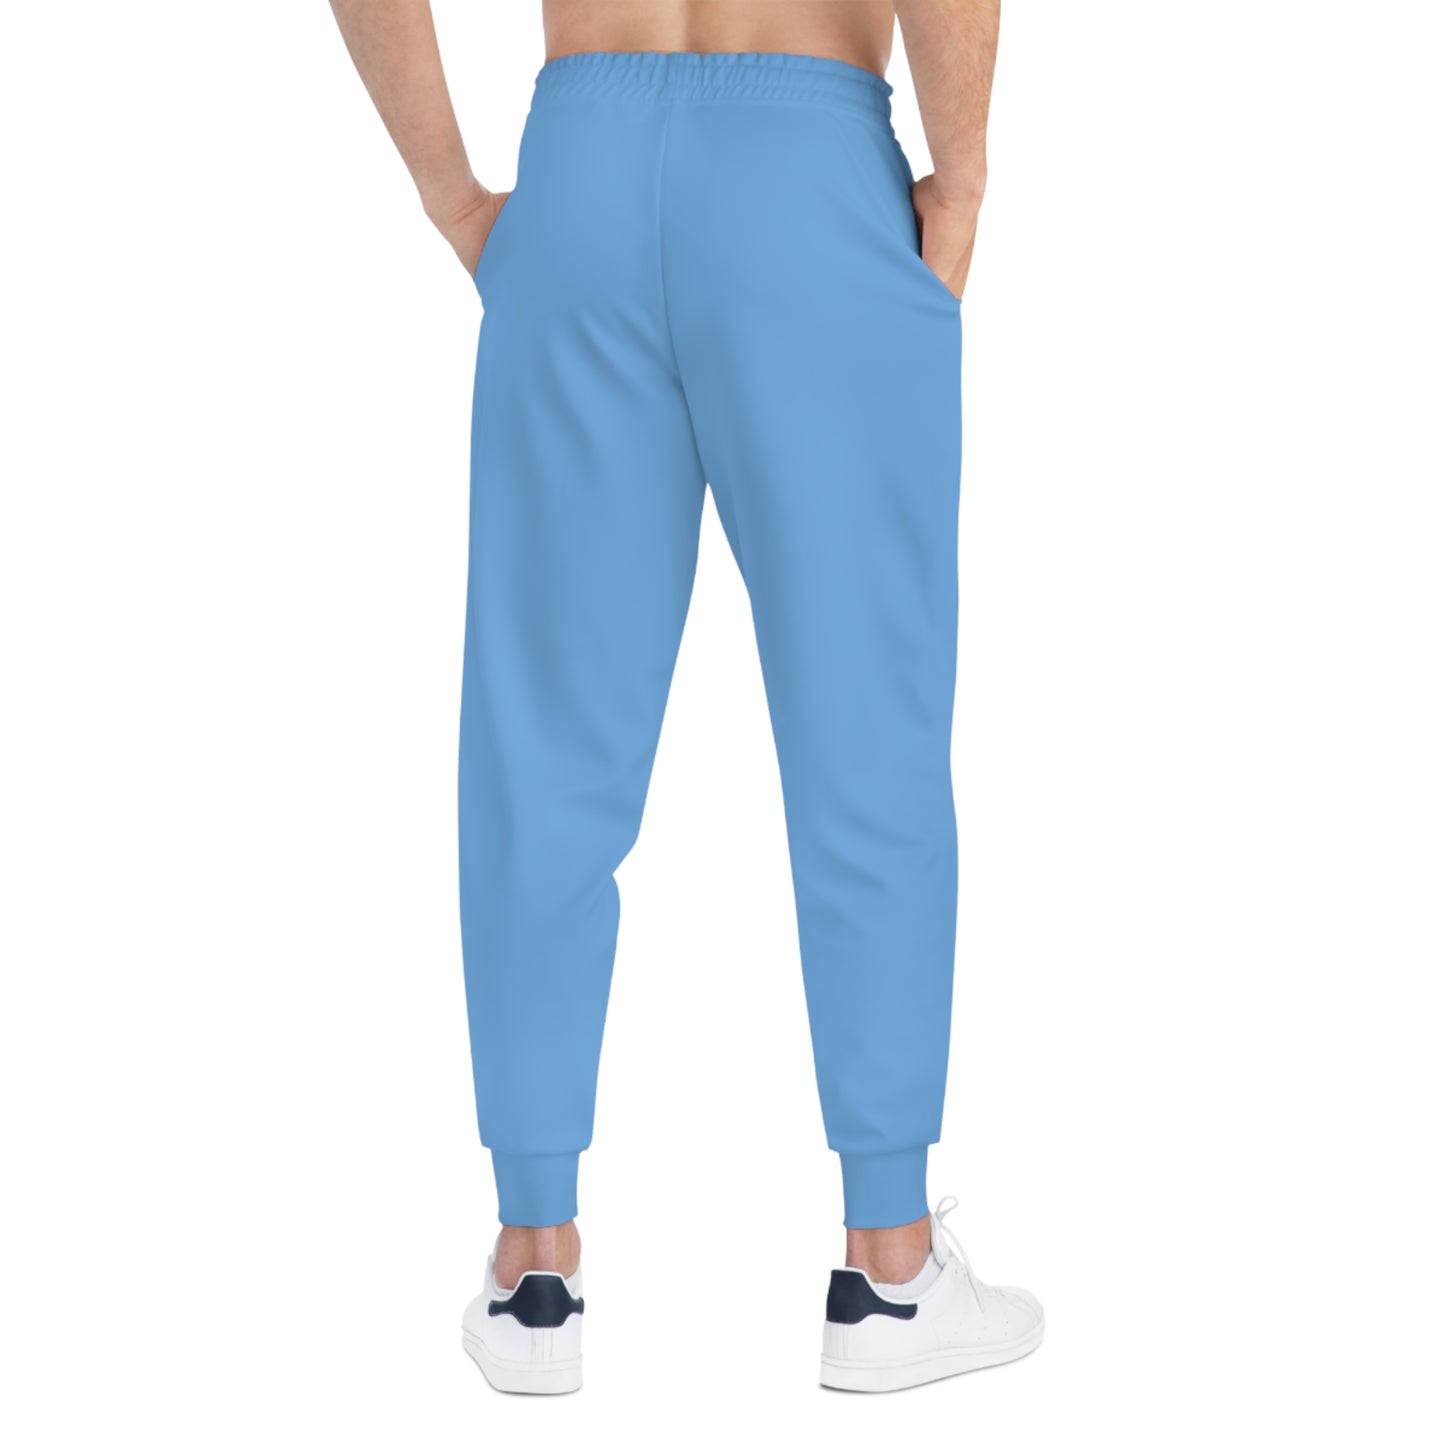 Men's Global sweatpants - Light blue